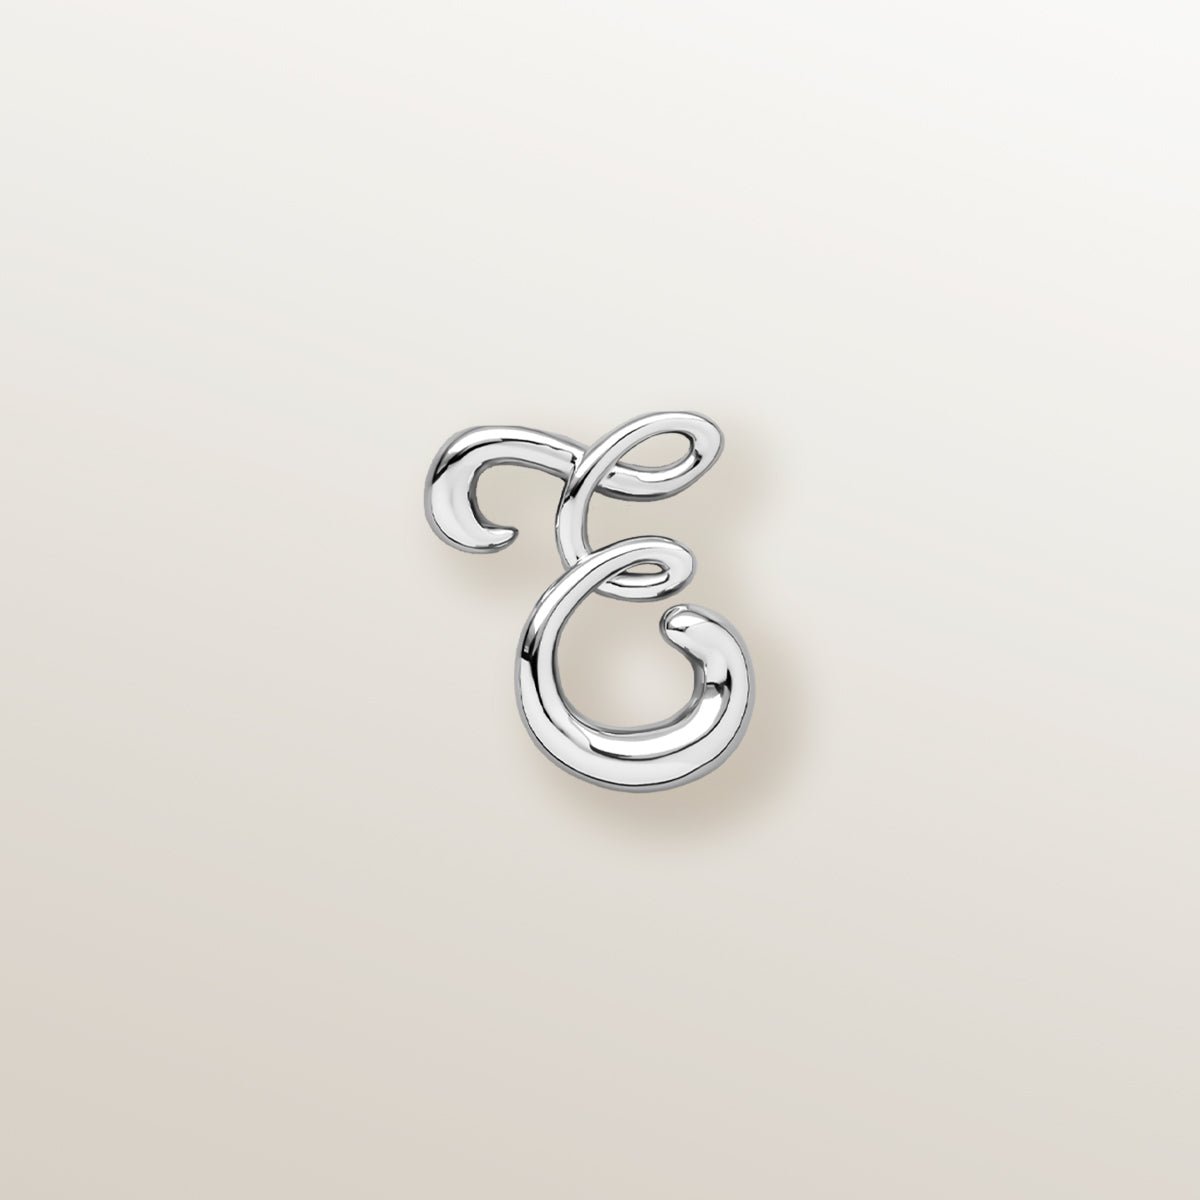 Colgante Inicial "E" de Plata 925 milésimas (2cm) - Victoria de la Calva